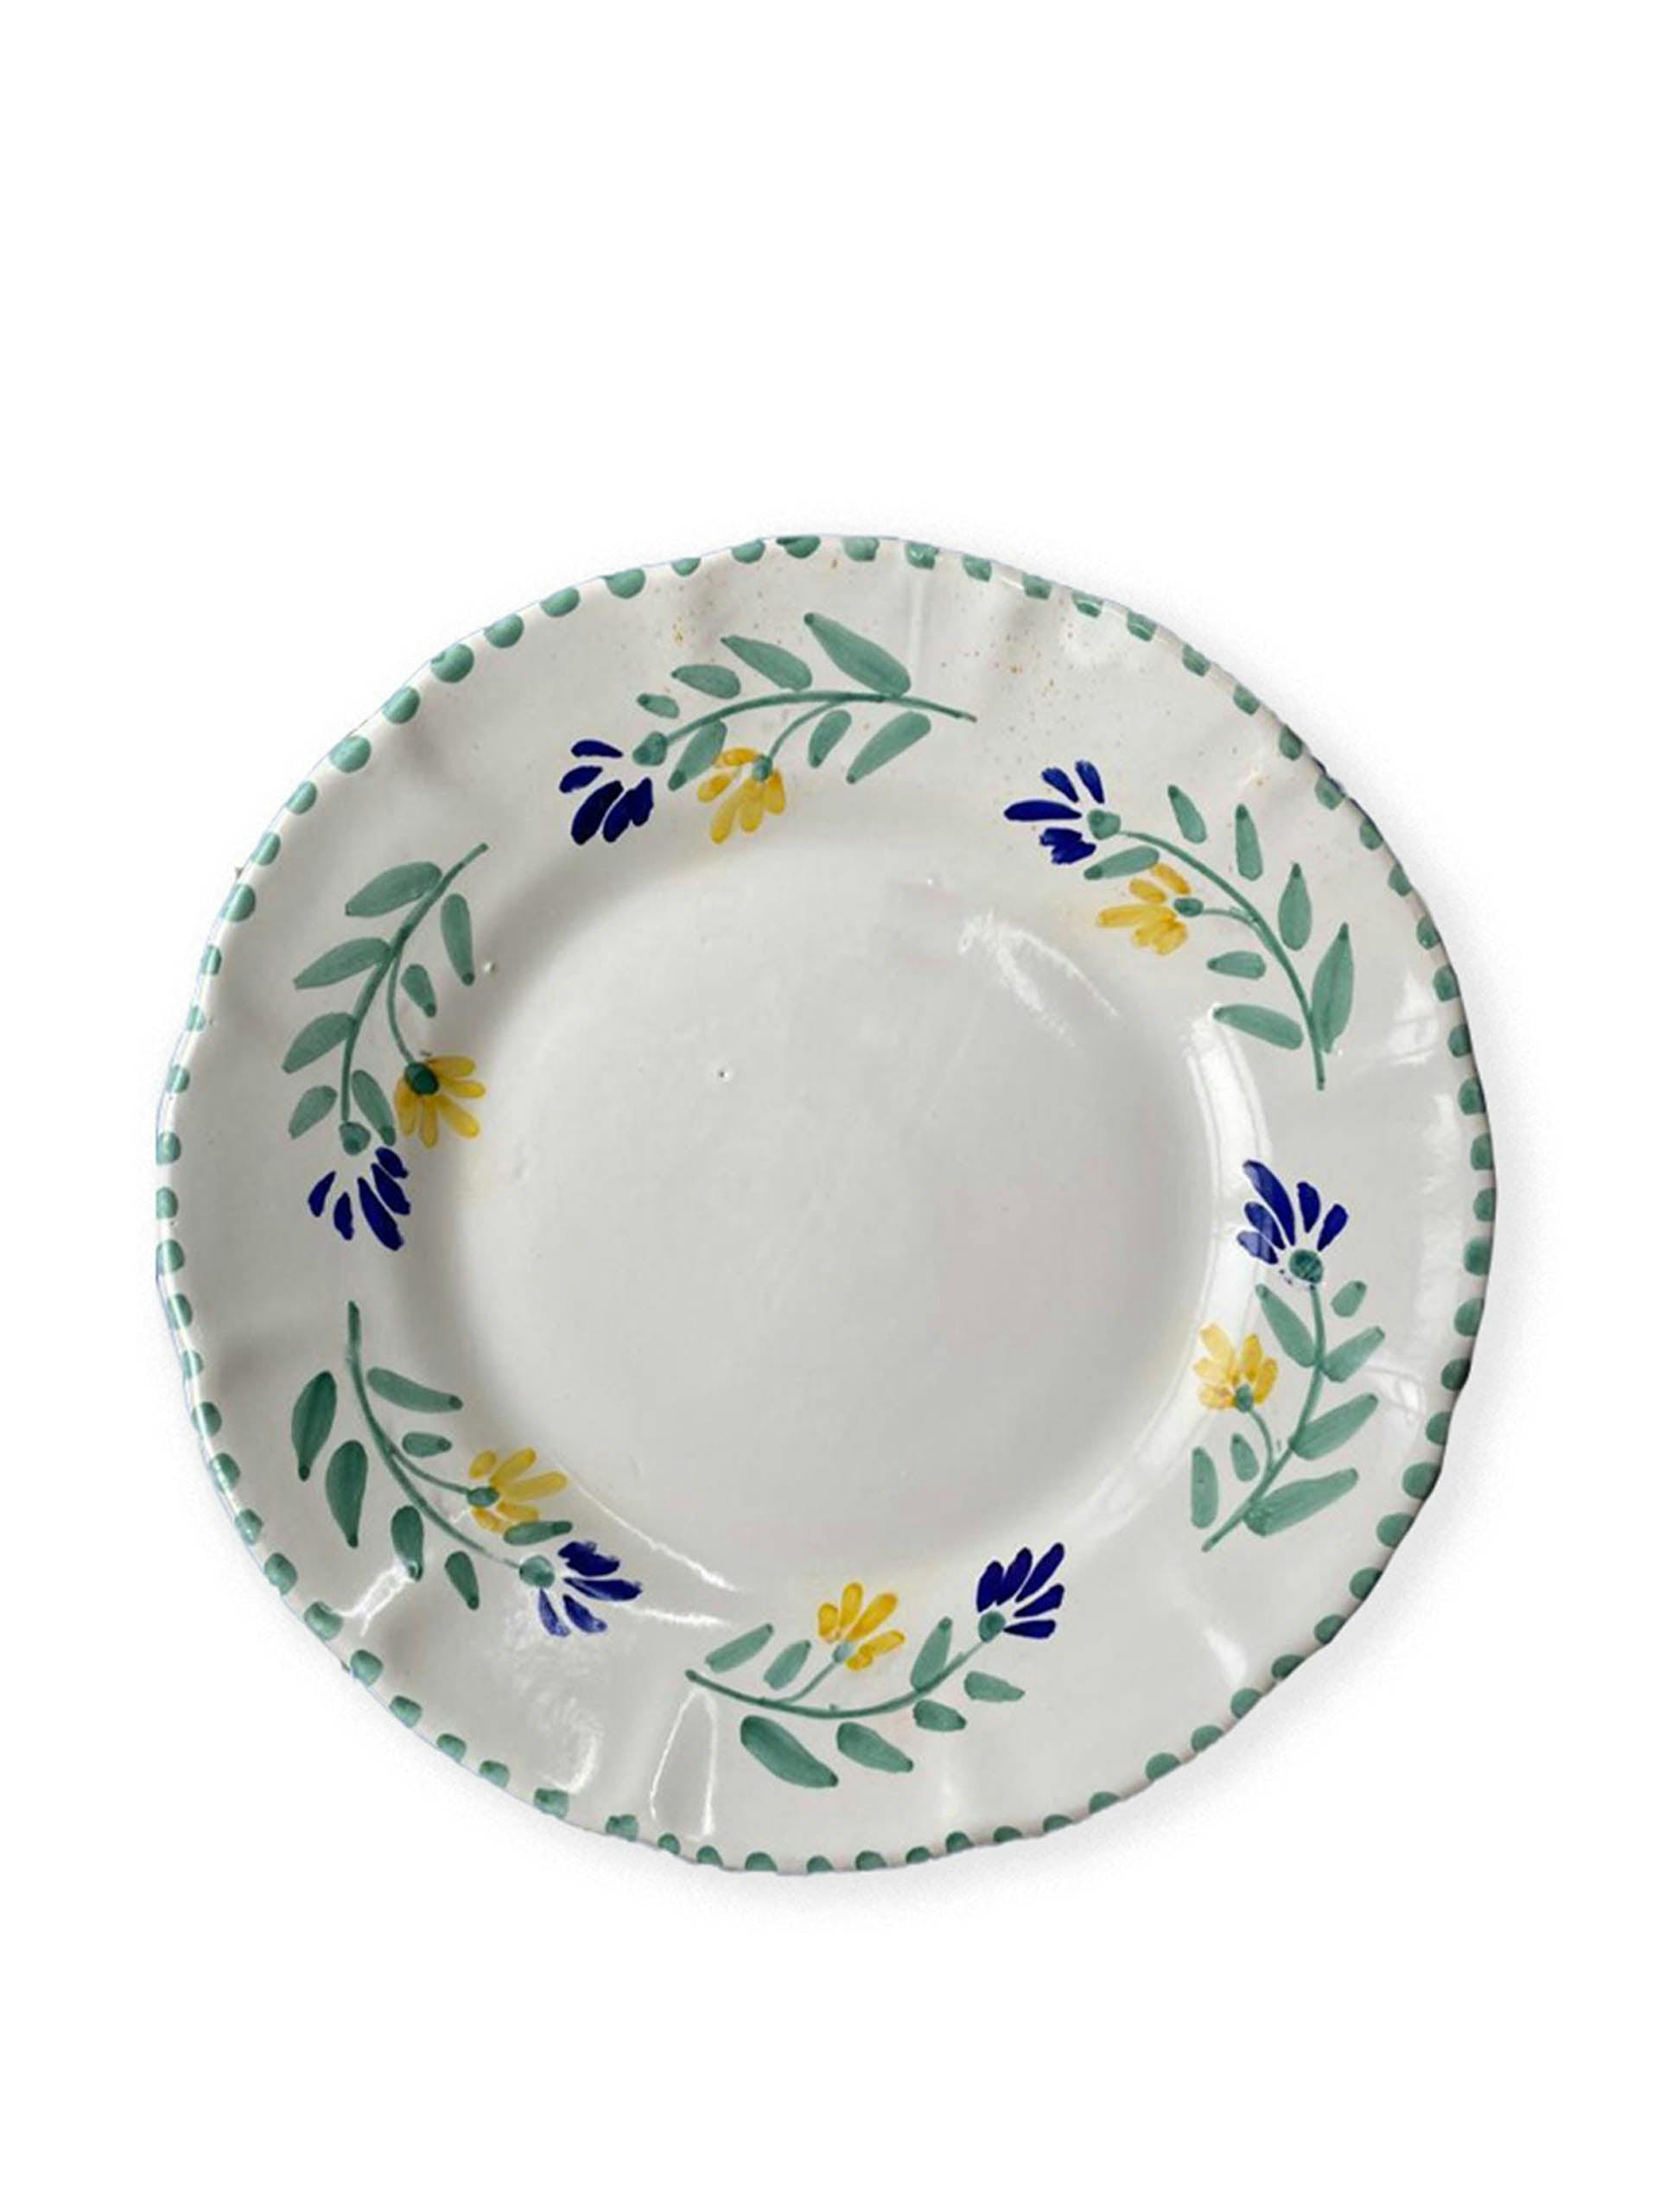 Frangipani dinner plates (set of 4)